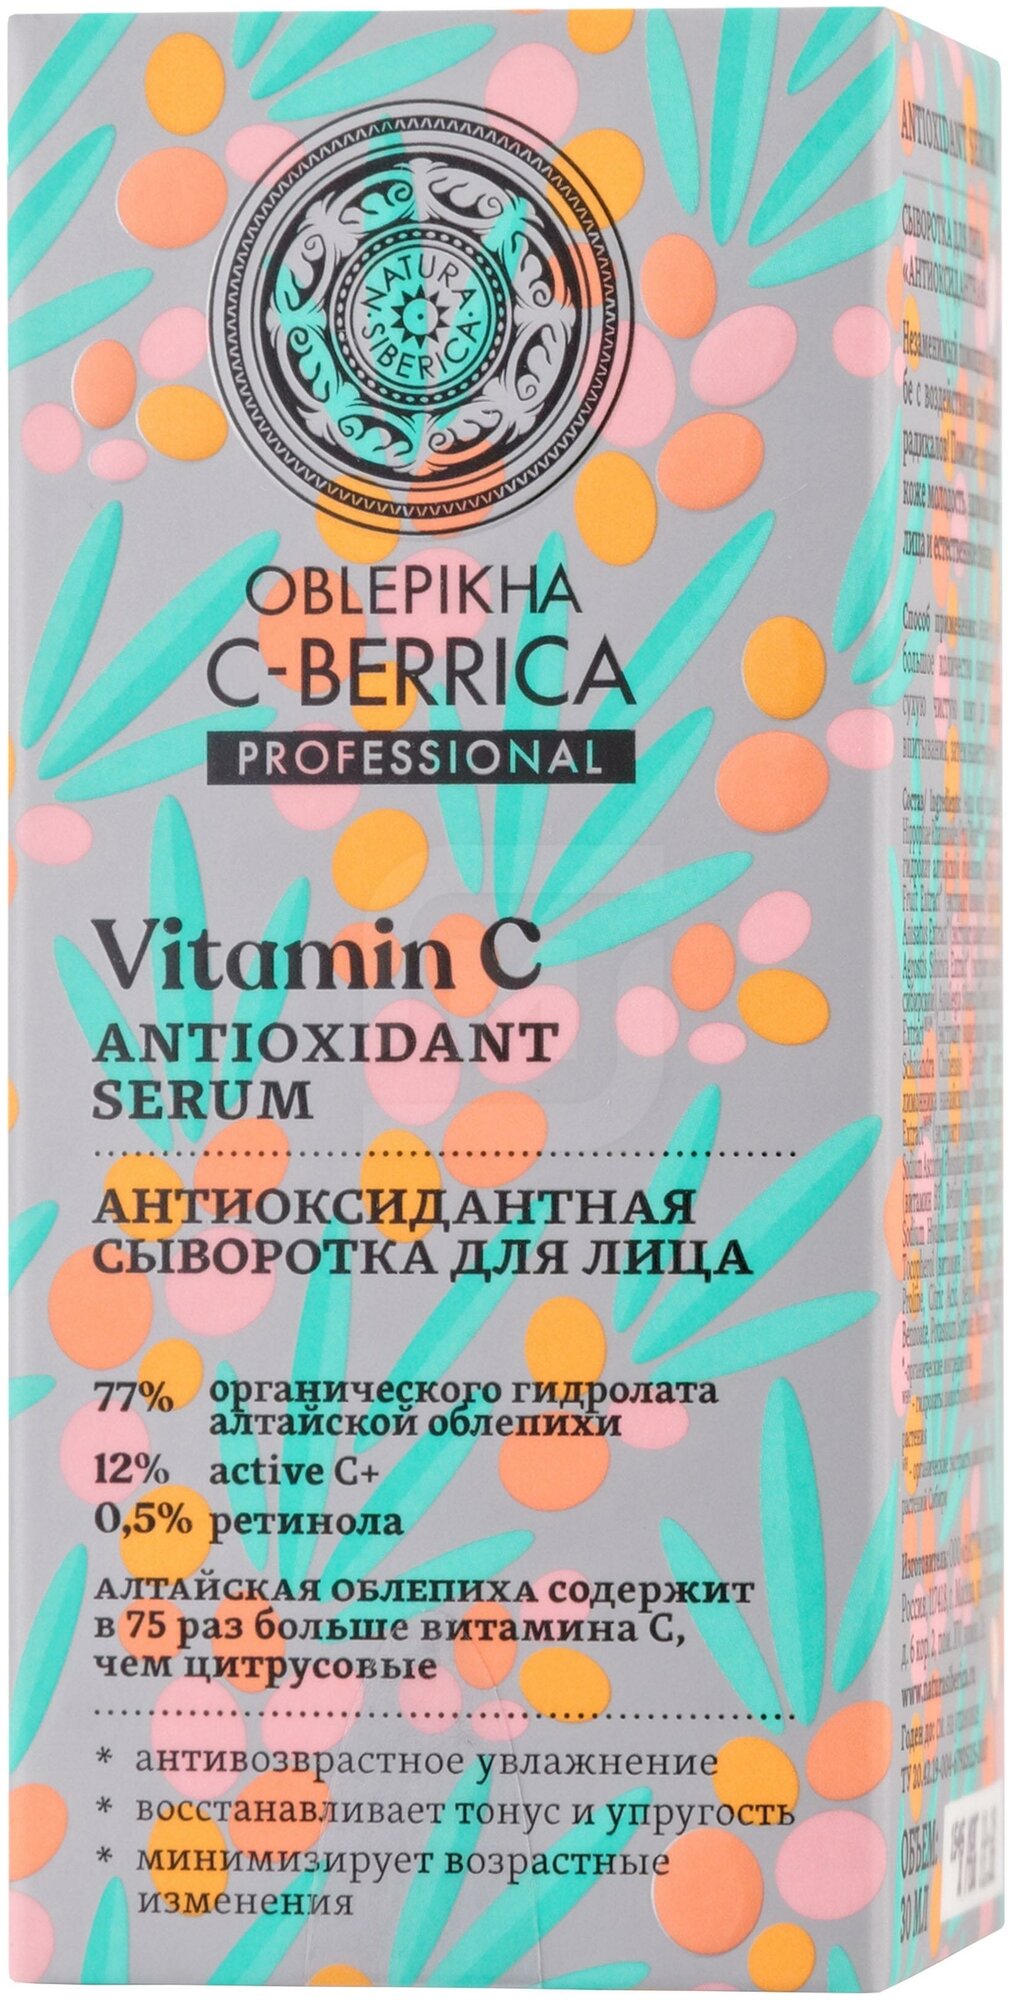 Natura Siberica Oblepikha С-Berrica Professional Vitamin C Antioxidant Serum Сыворотка для лица антиоксидантная, 30 мл